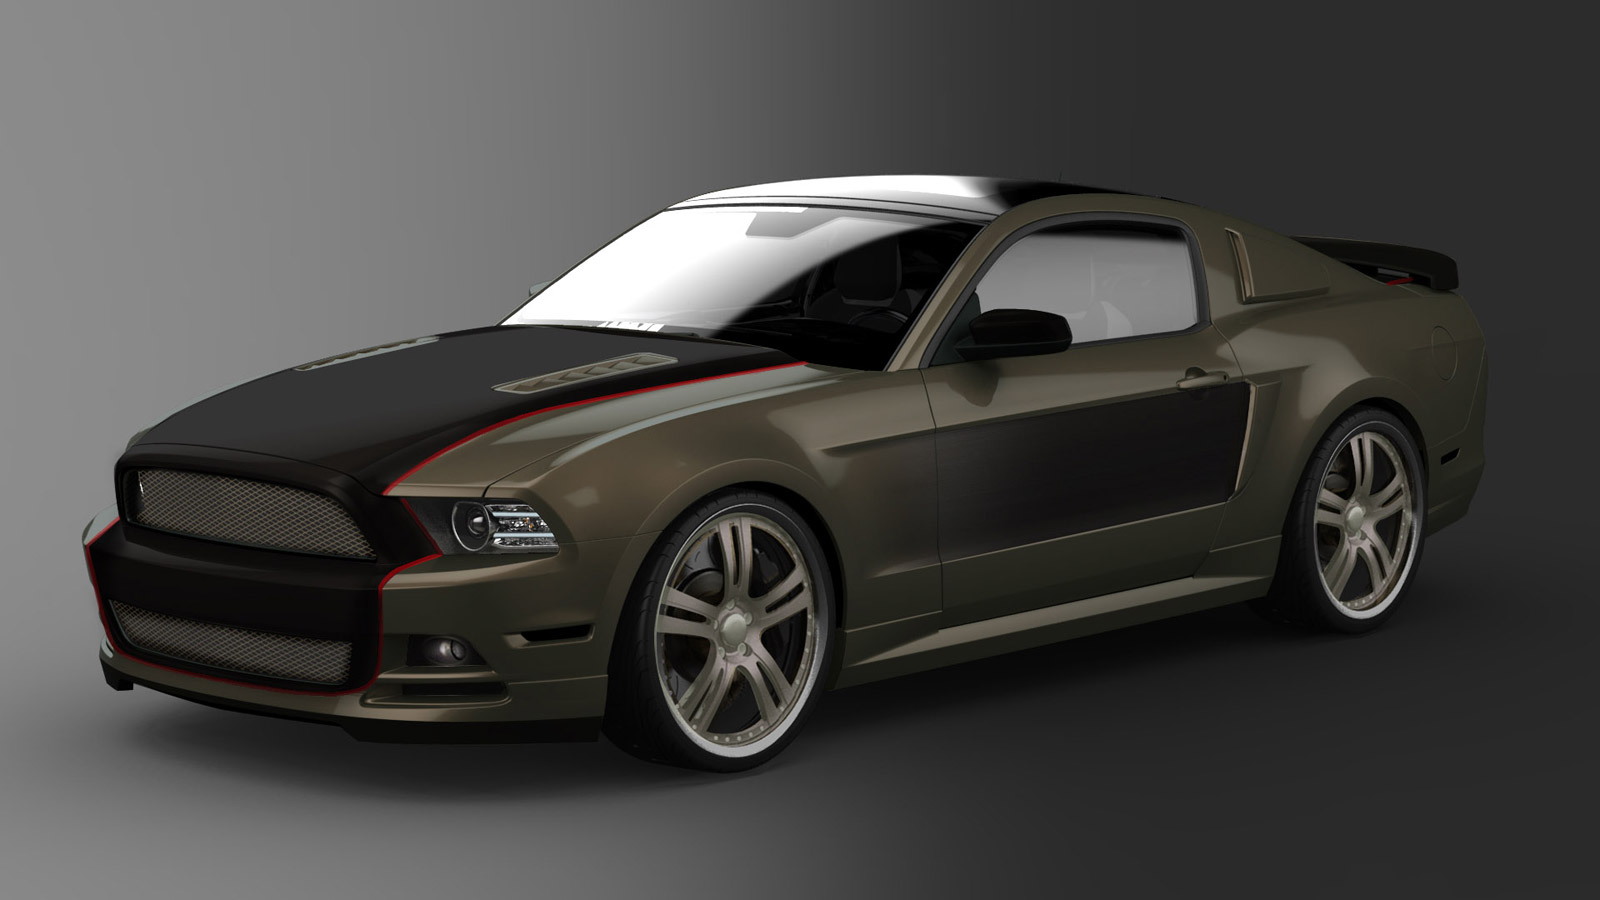 2012 SEMA Mustang Build: Fast Metal Exterior by Theresa Contreras